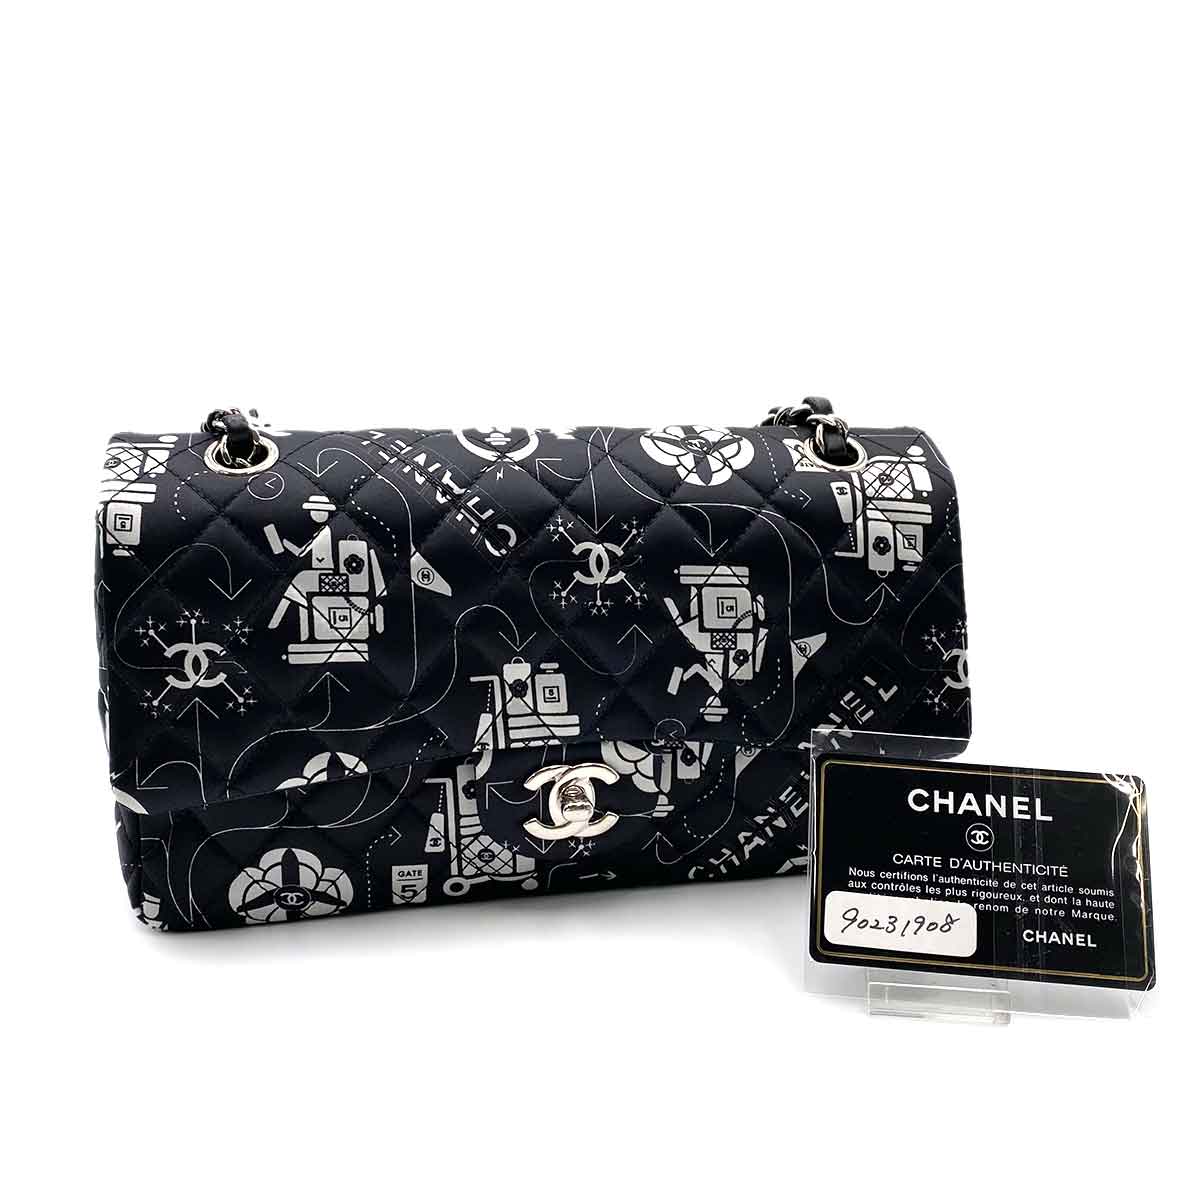 Chanel Chanel Vintage Classic Flap Medium Airline Satin SHW #2 90231908